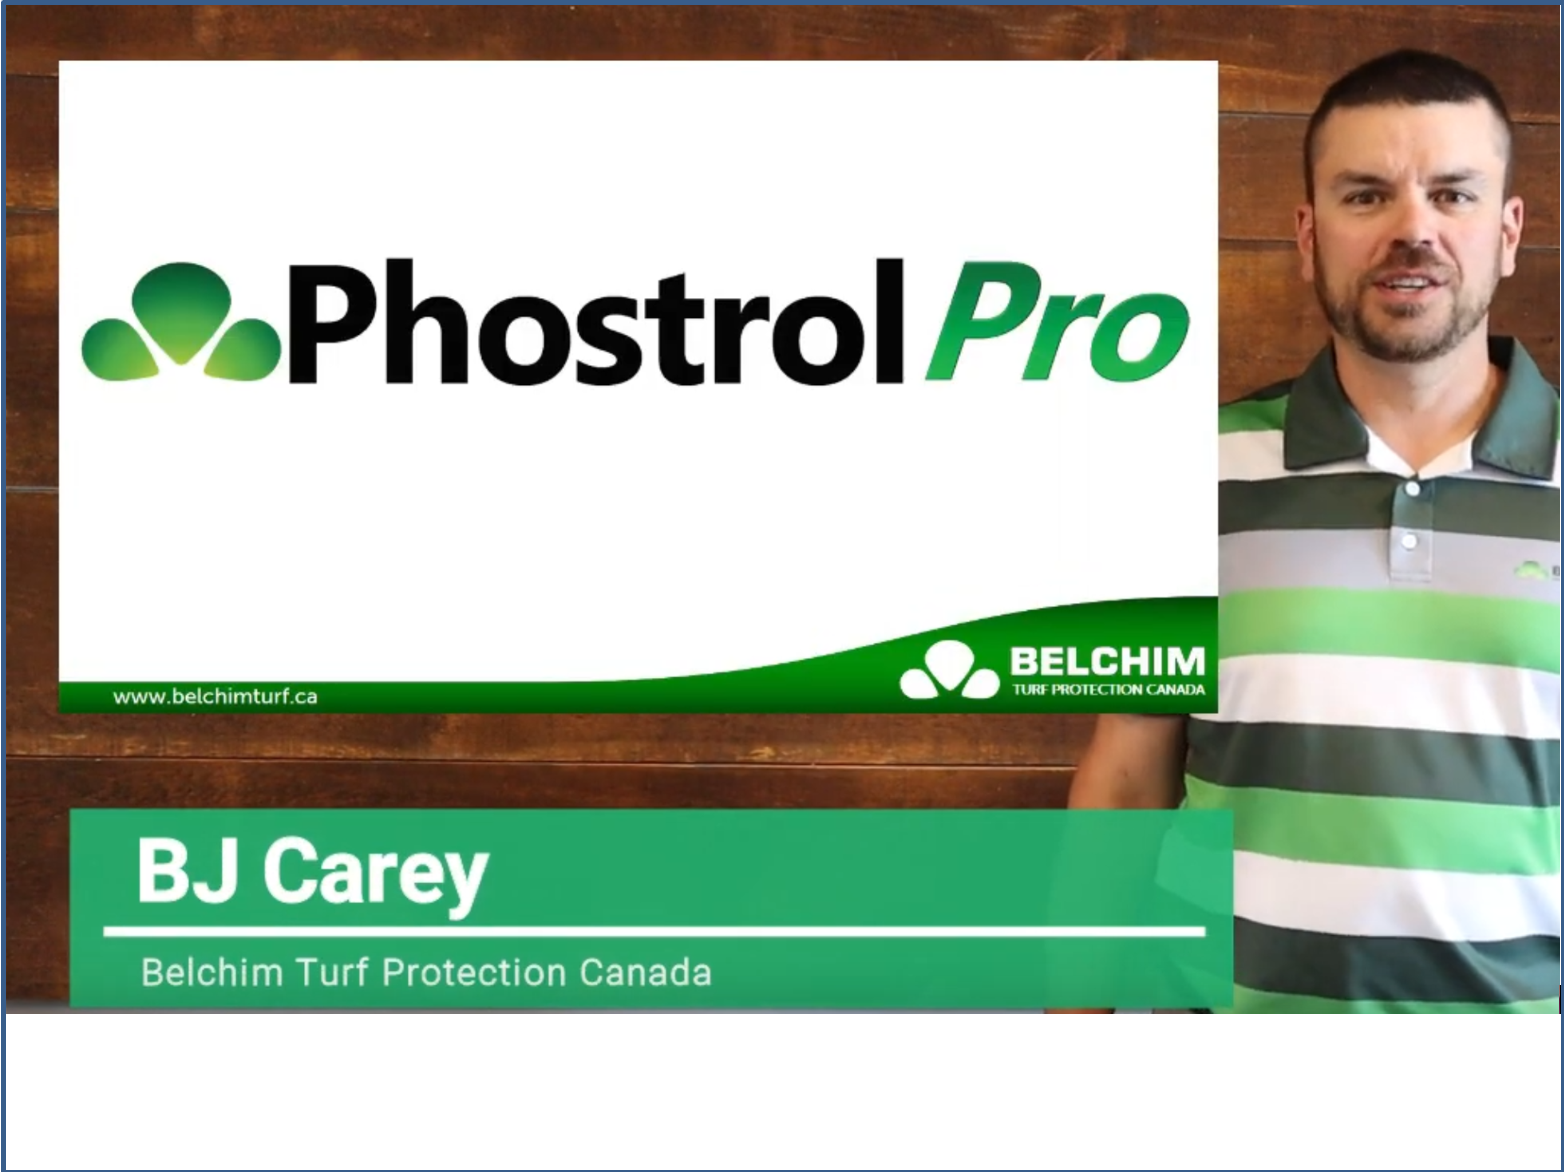 Phostrol Pro